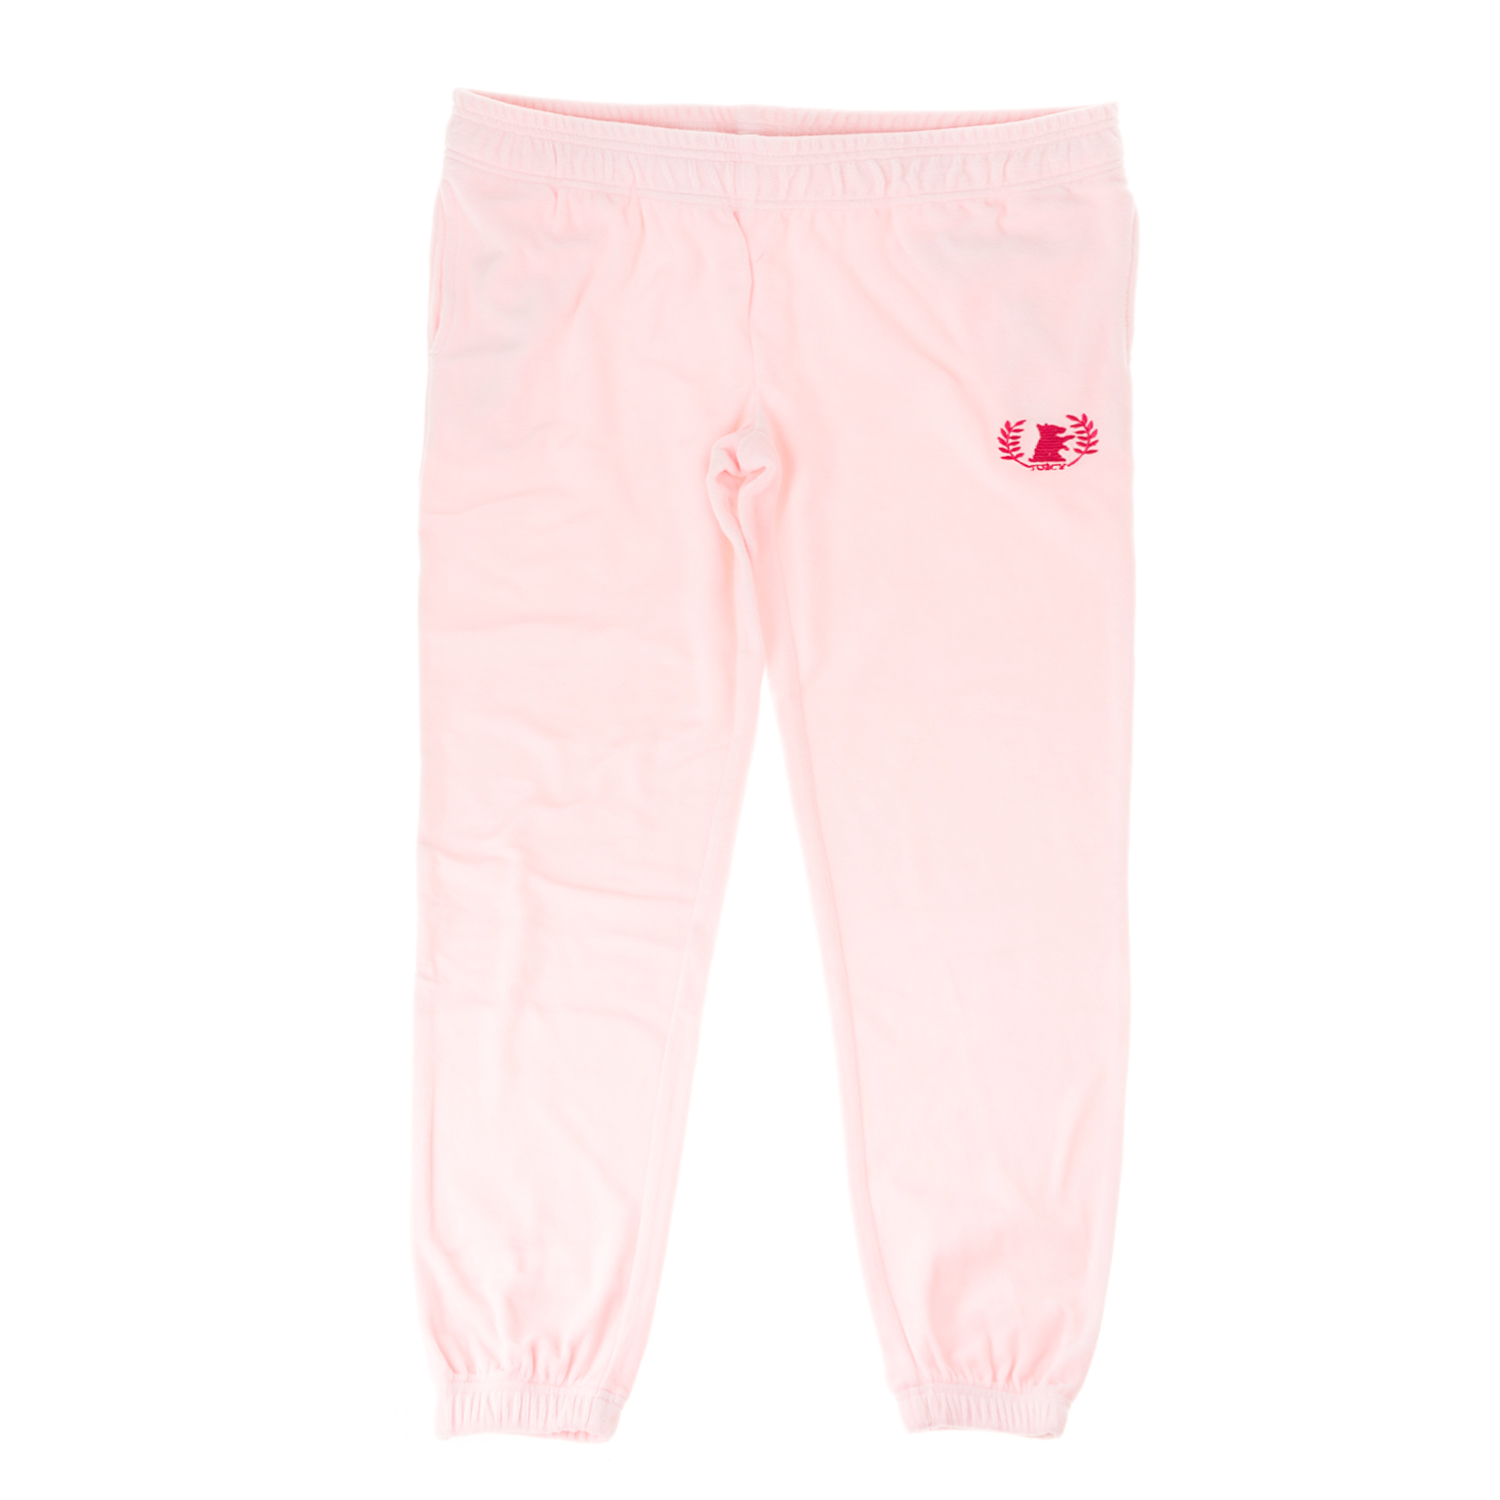 JUICY COUTURE KIDS - Παιδικό παντελόνι φόρμας JUICY COUTURE KIDS SOLID VELOUR TRACK ροζ Παιδικά/Girls/Ρούχα/Παντελόνια